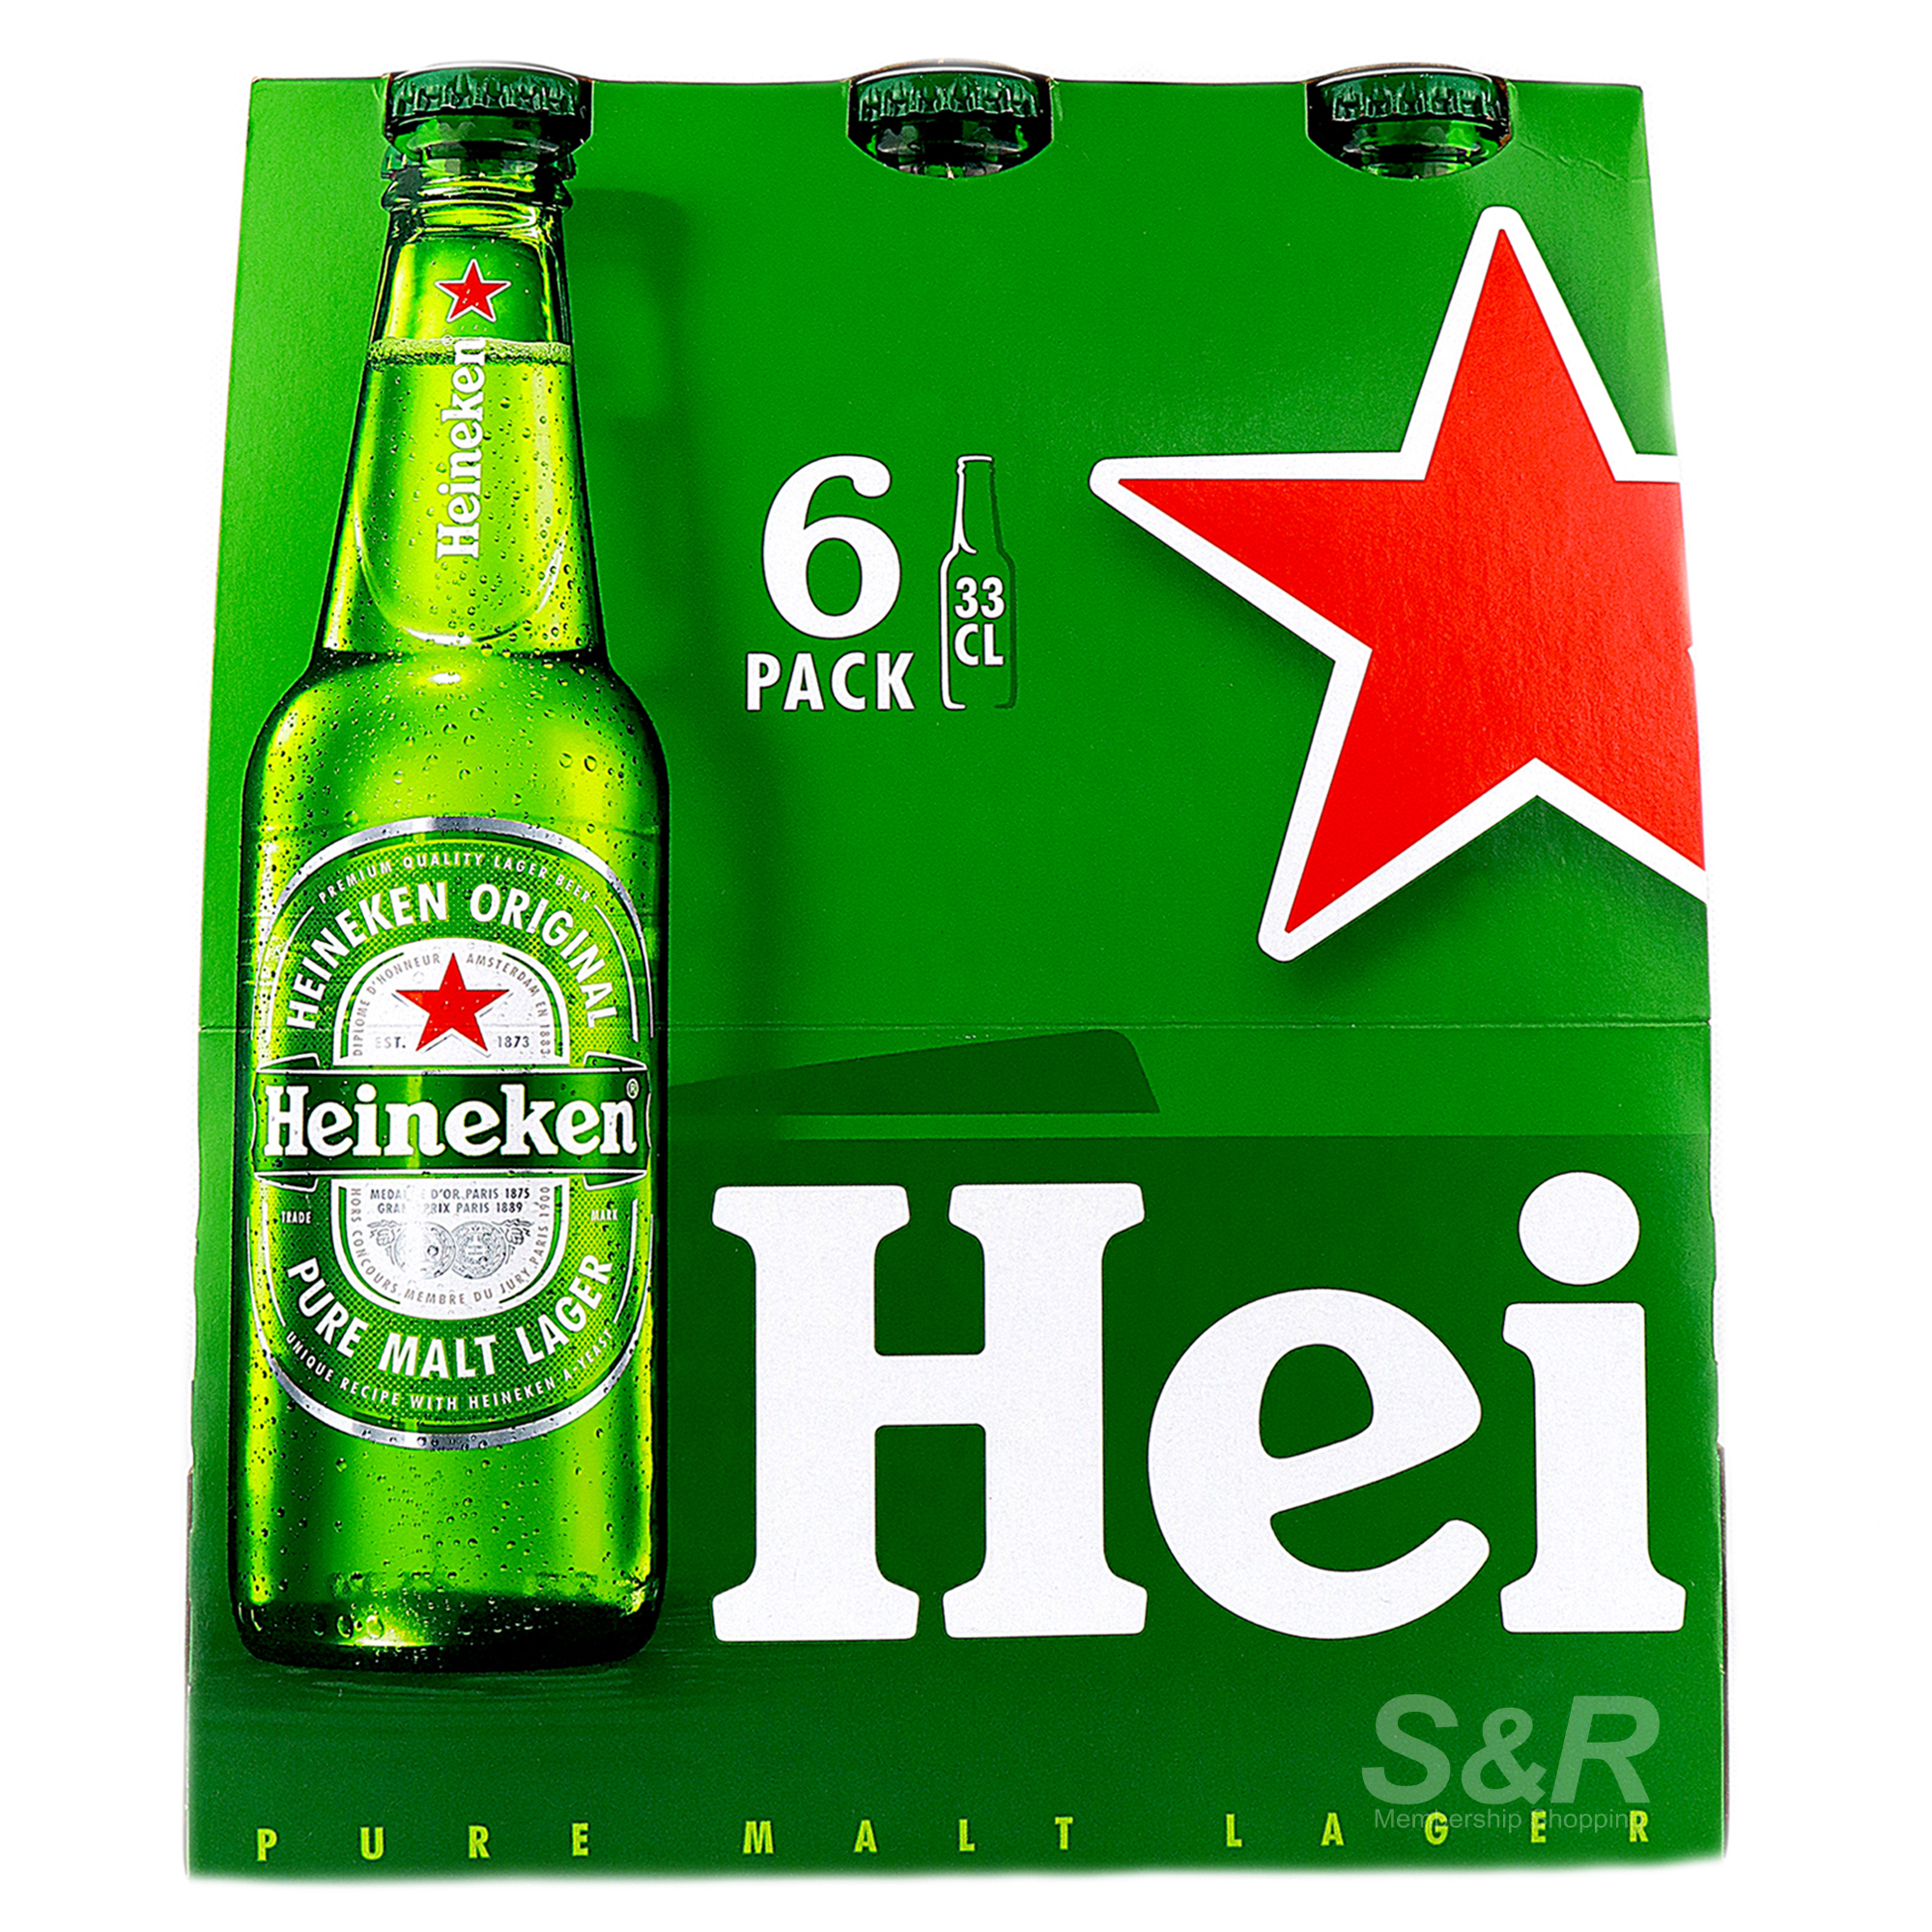 Heineken Pure Malt Lager Beer 6 bottles